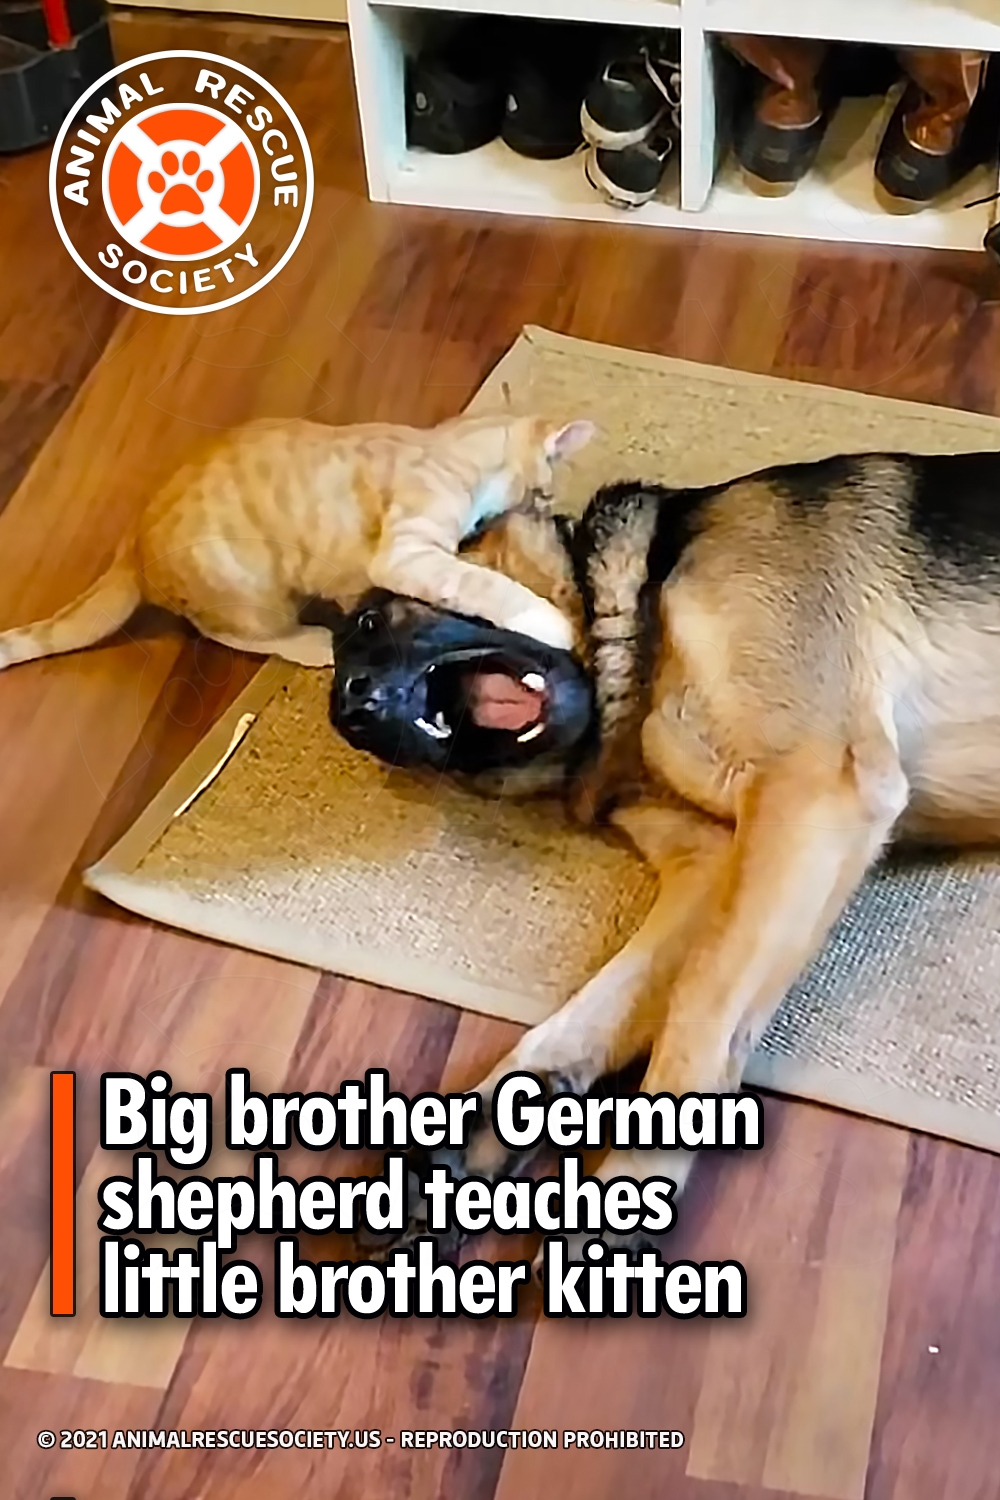 Big brother German shepherd teaches little brother kitten